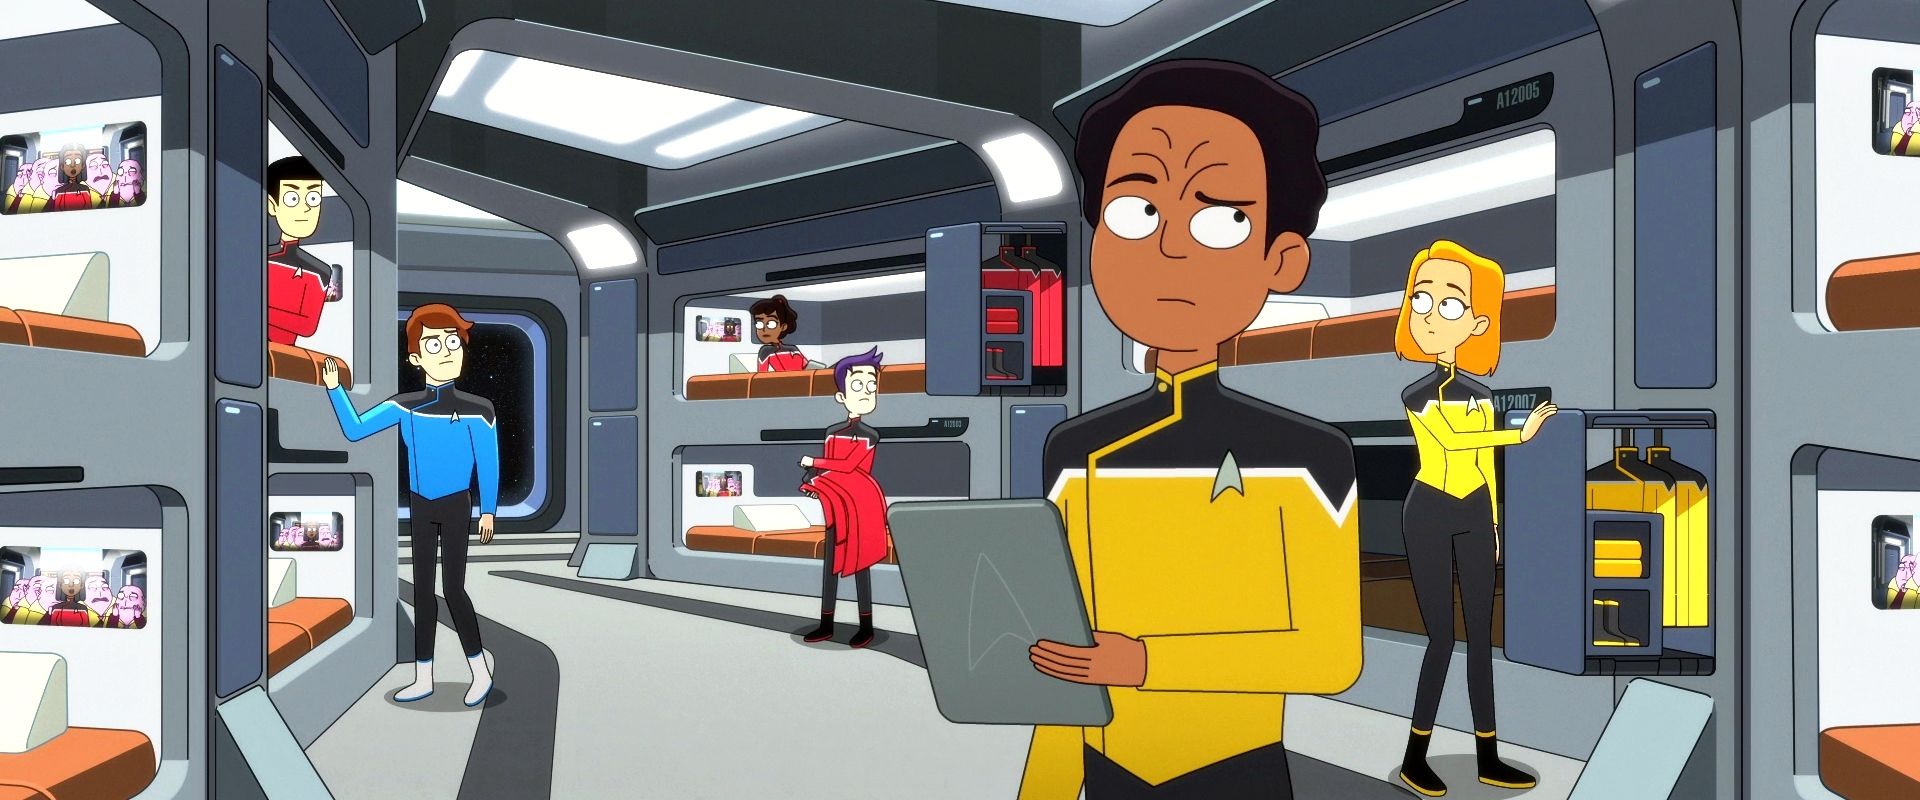 Star Trek: Lower Deck Season 2, Episode 6